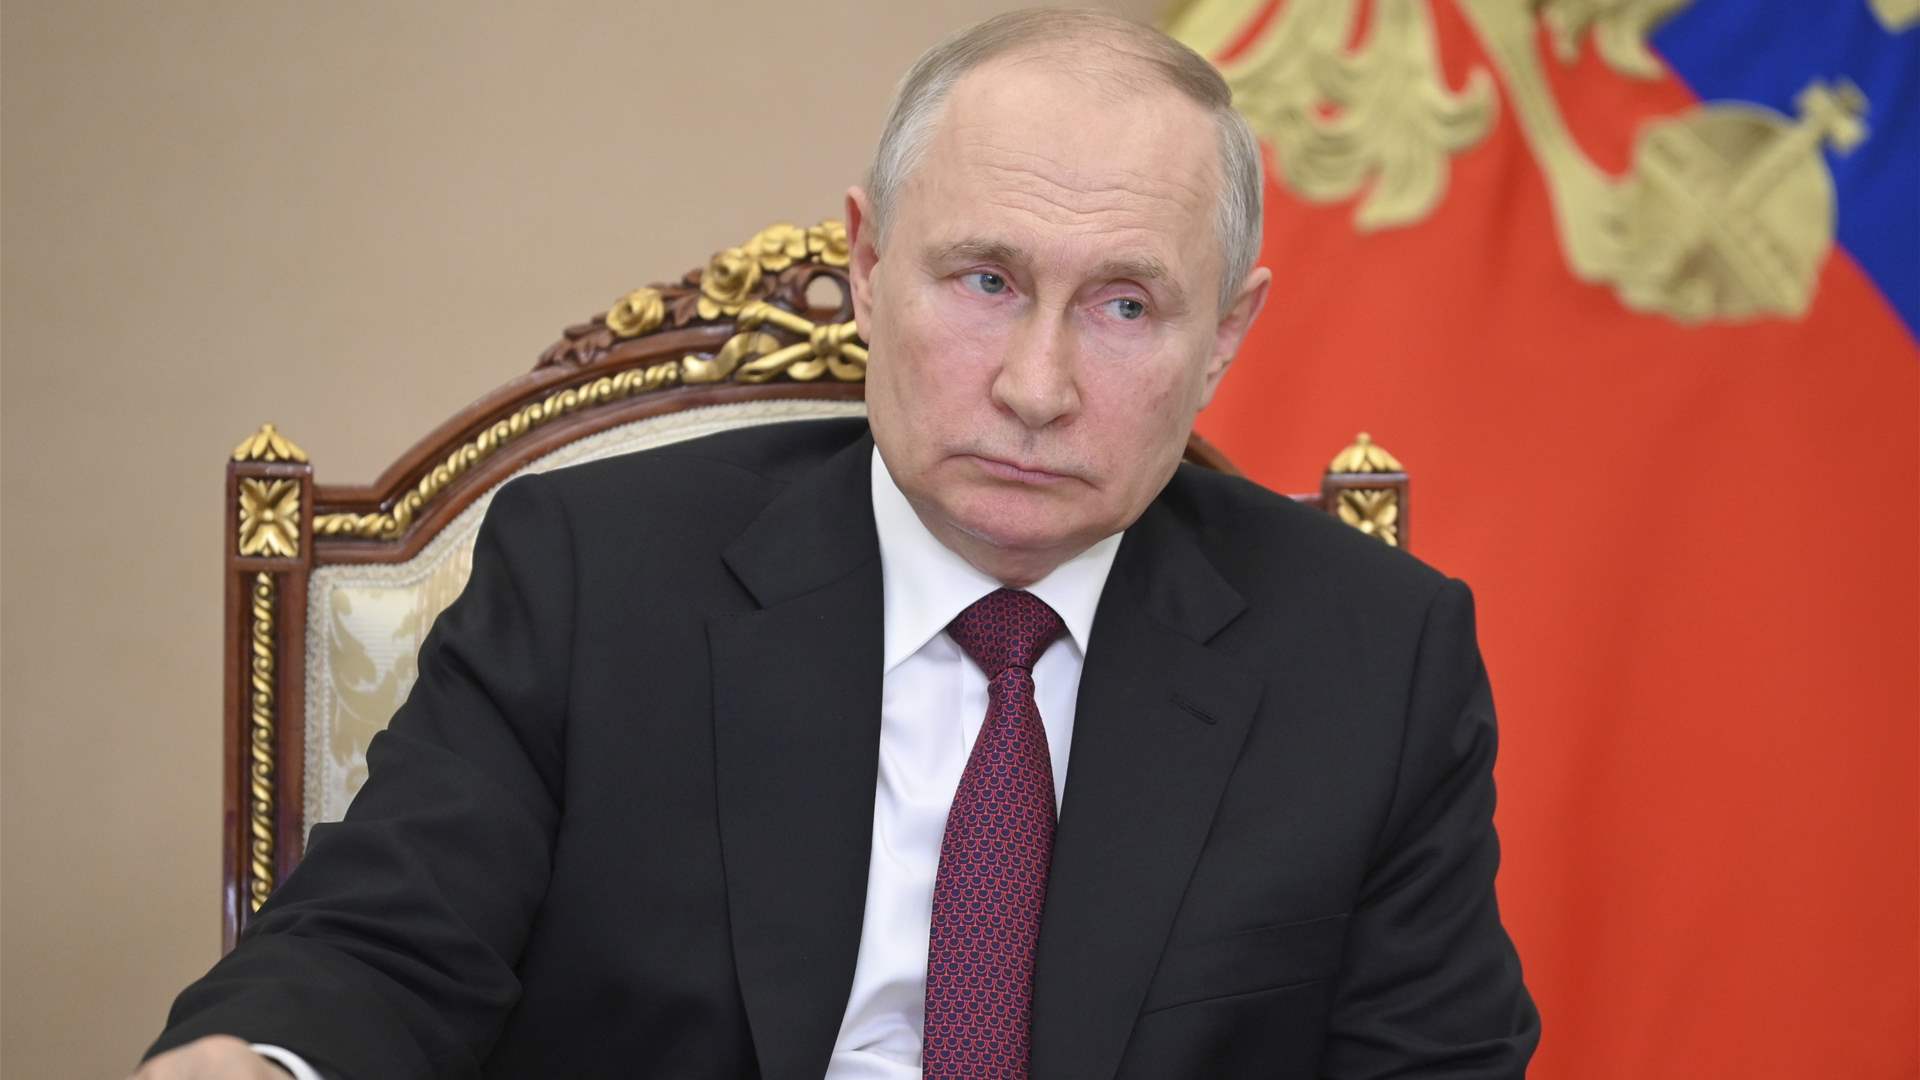 Kremlin states Russia is consolidated around Putin, dismisses West&#39;s criticism